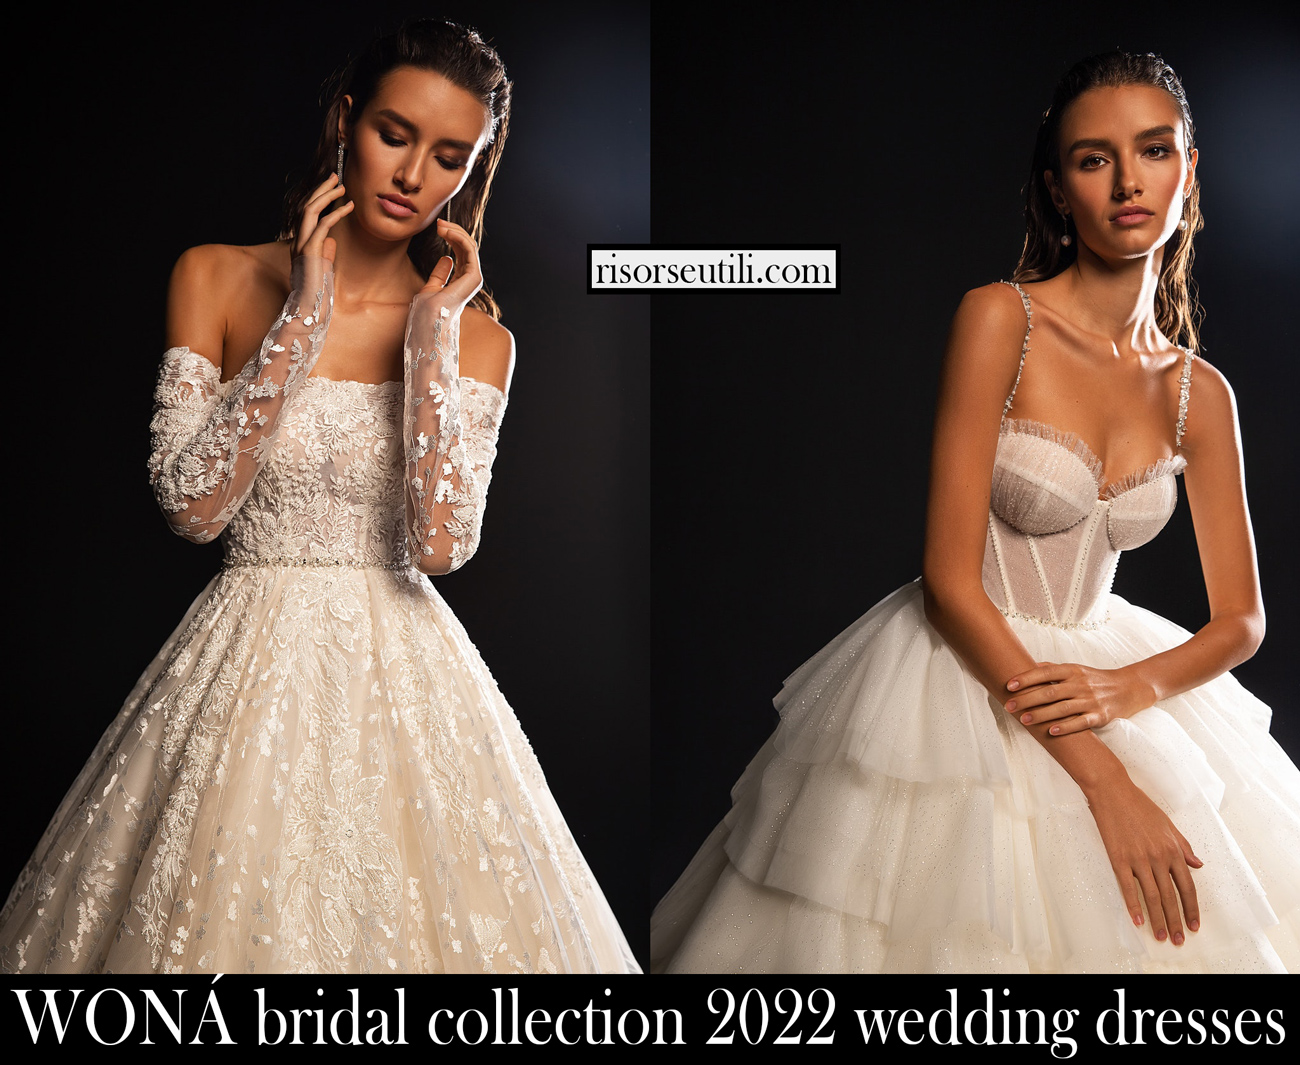 WONA bridal collection 2022 wedding dresses